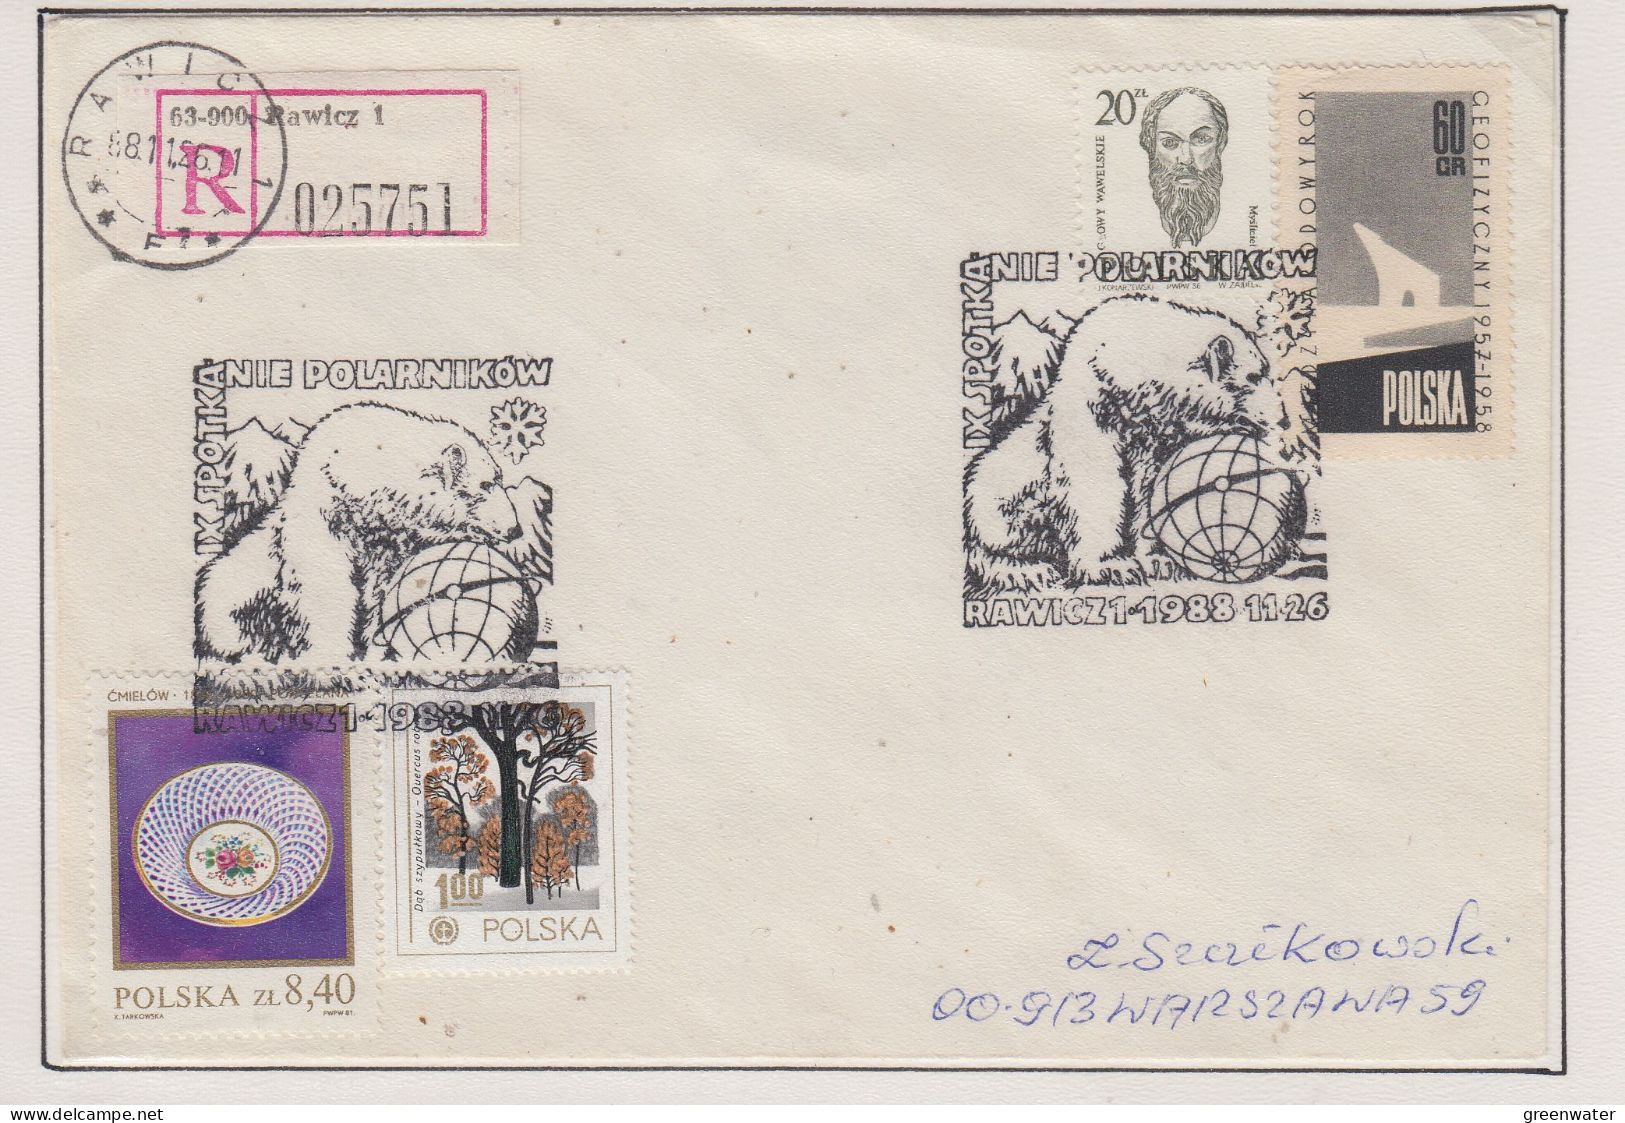 Poland  Registered Cover  Icebear / Polarnikov   Ca Rawicz1 11-26-1988 (TI154A) - Arctic Wildlife